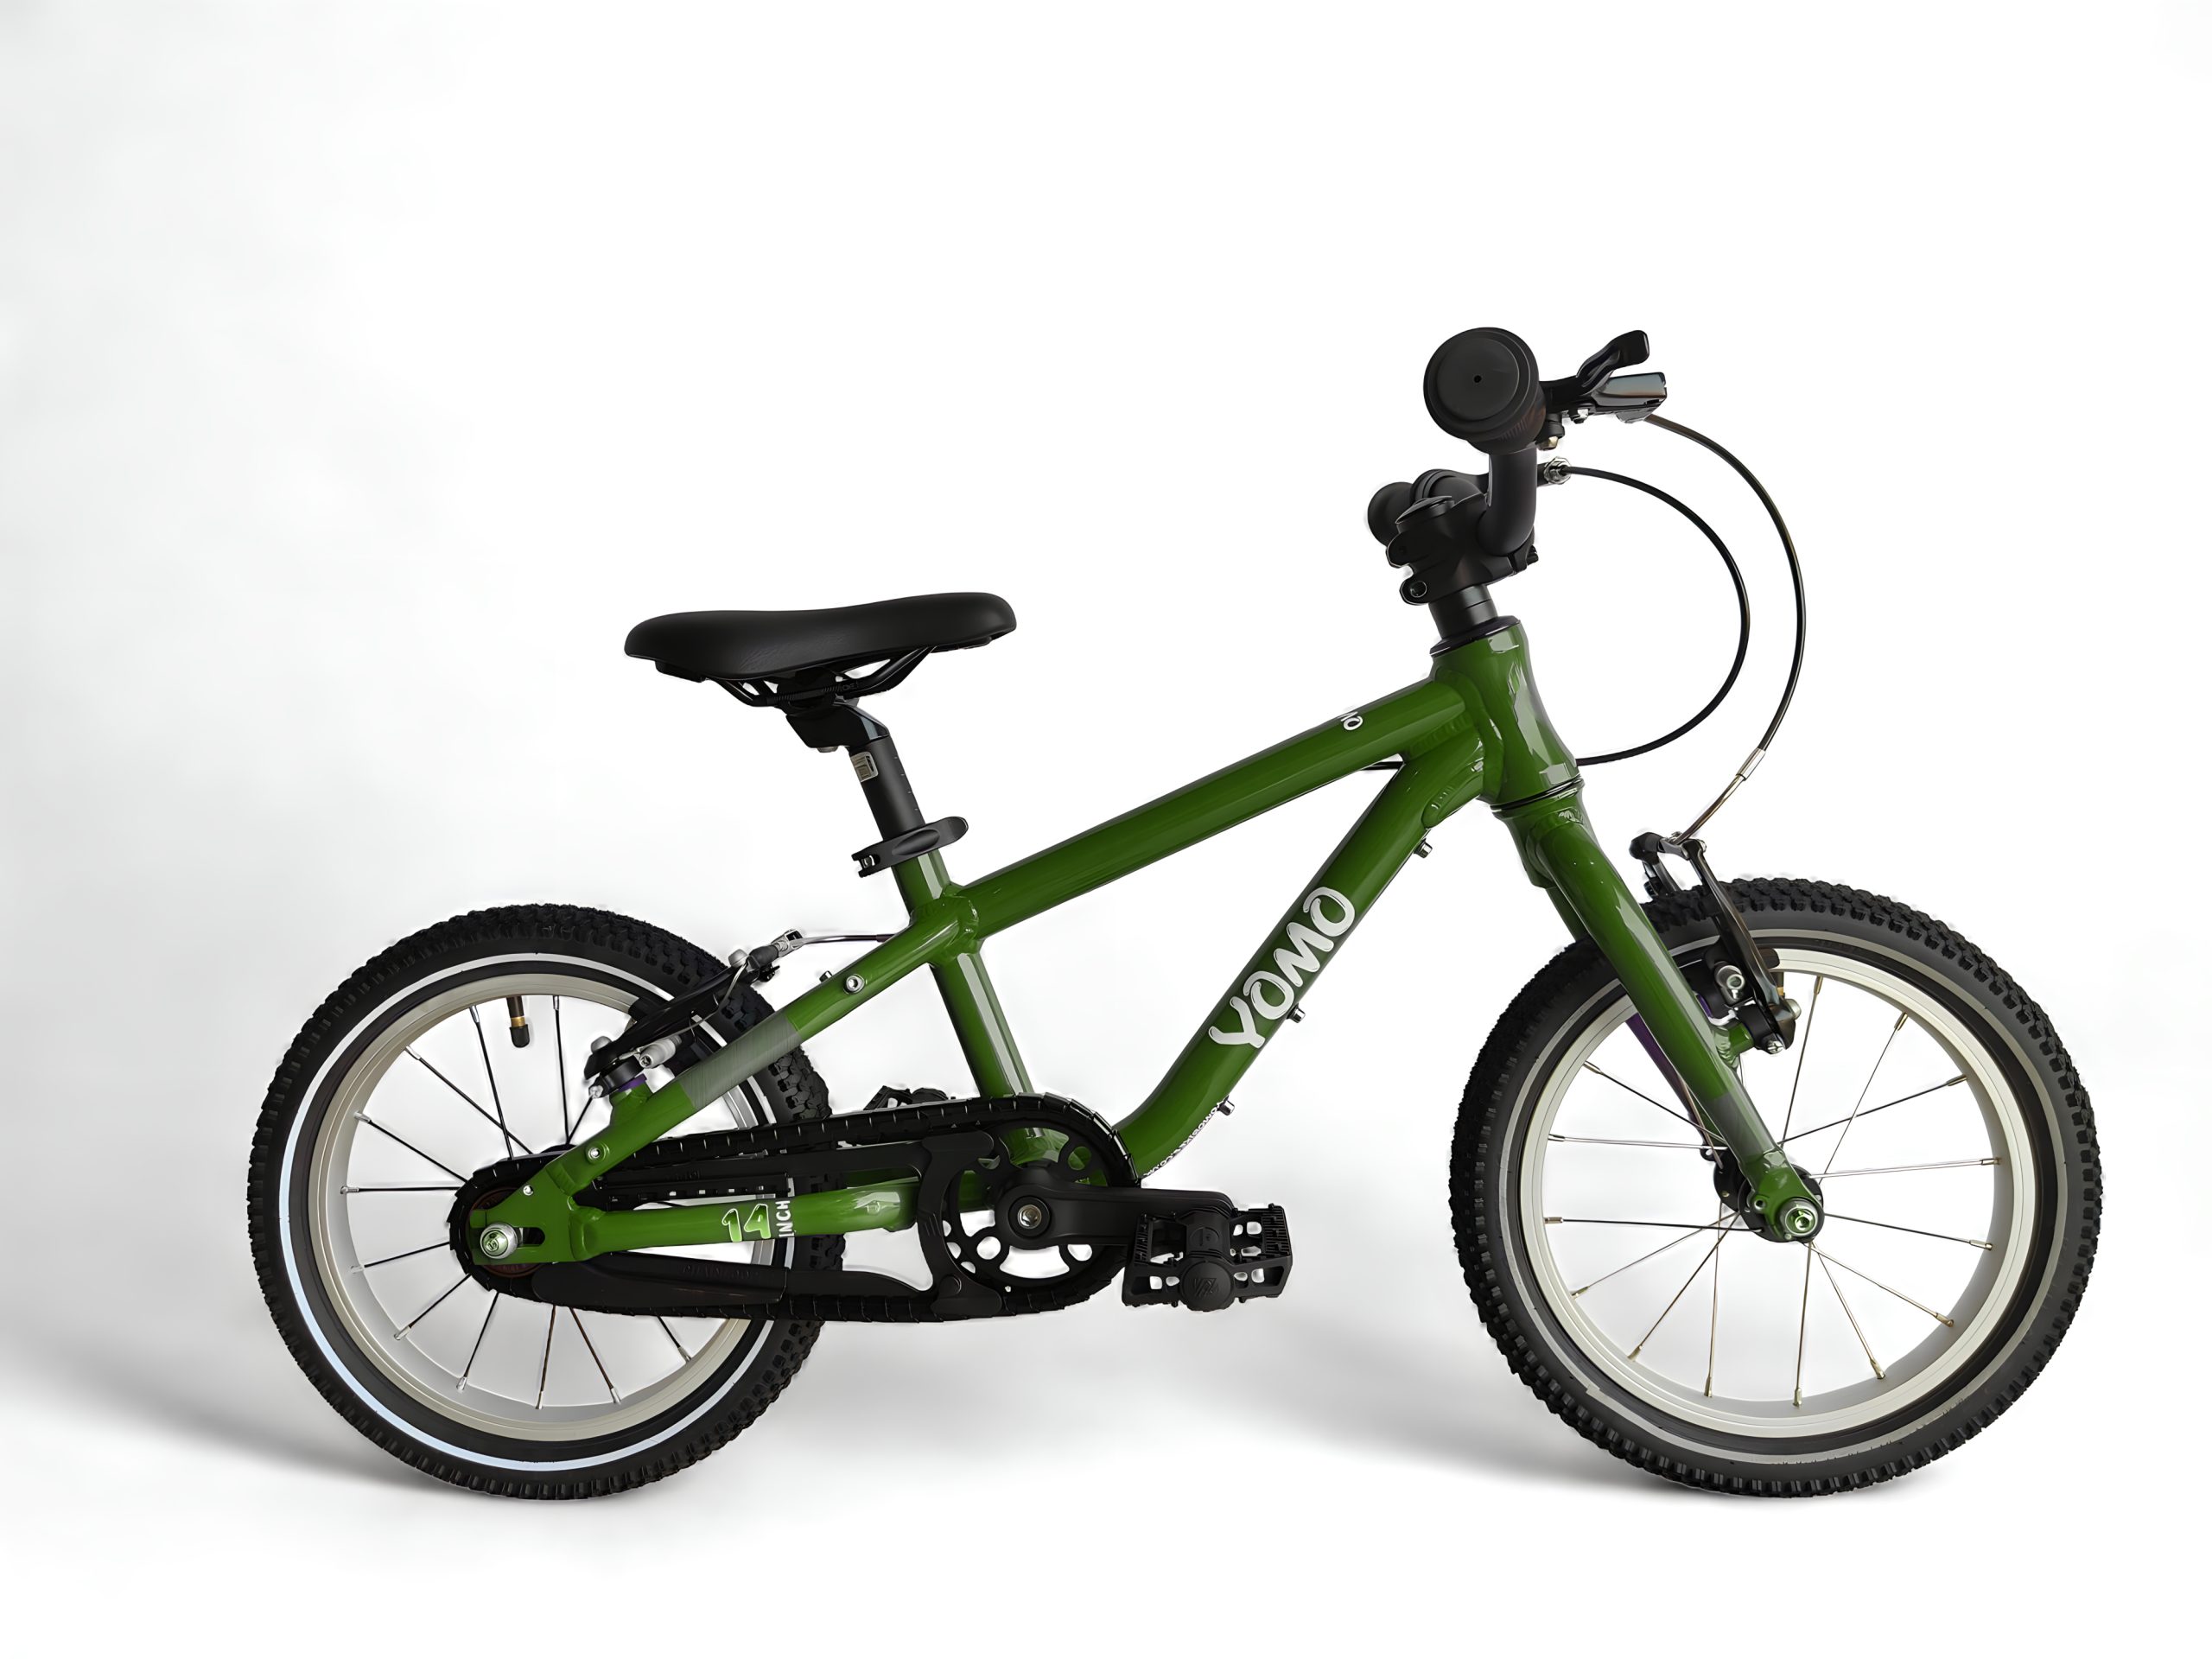 YOMO 14" Wheel Alloy Kids Bike : Green